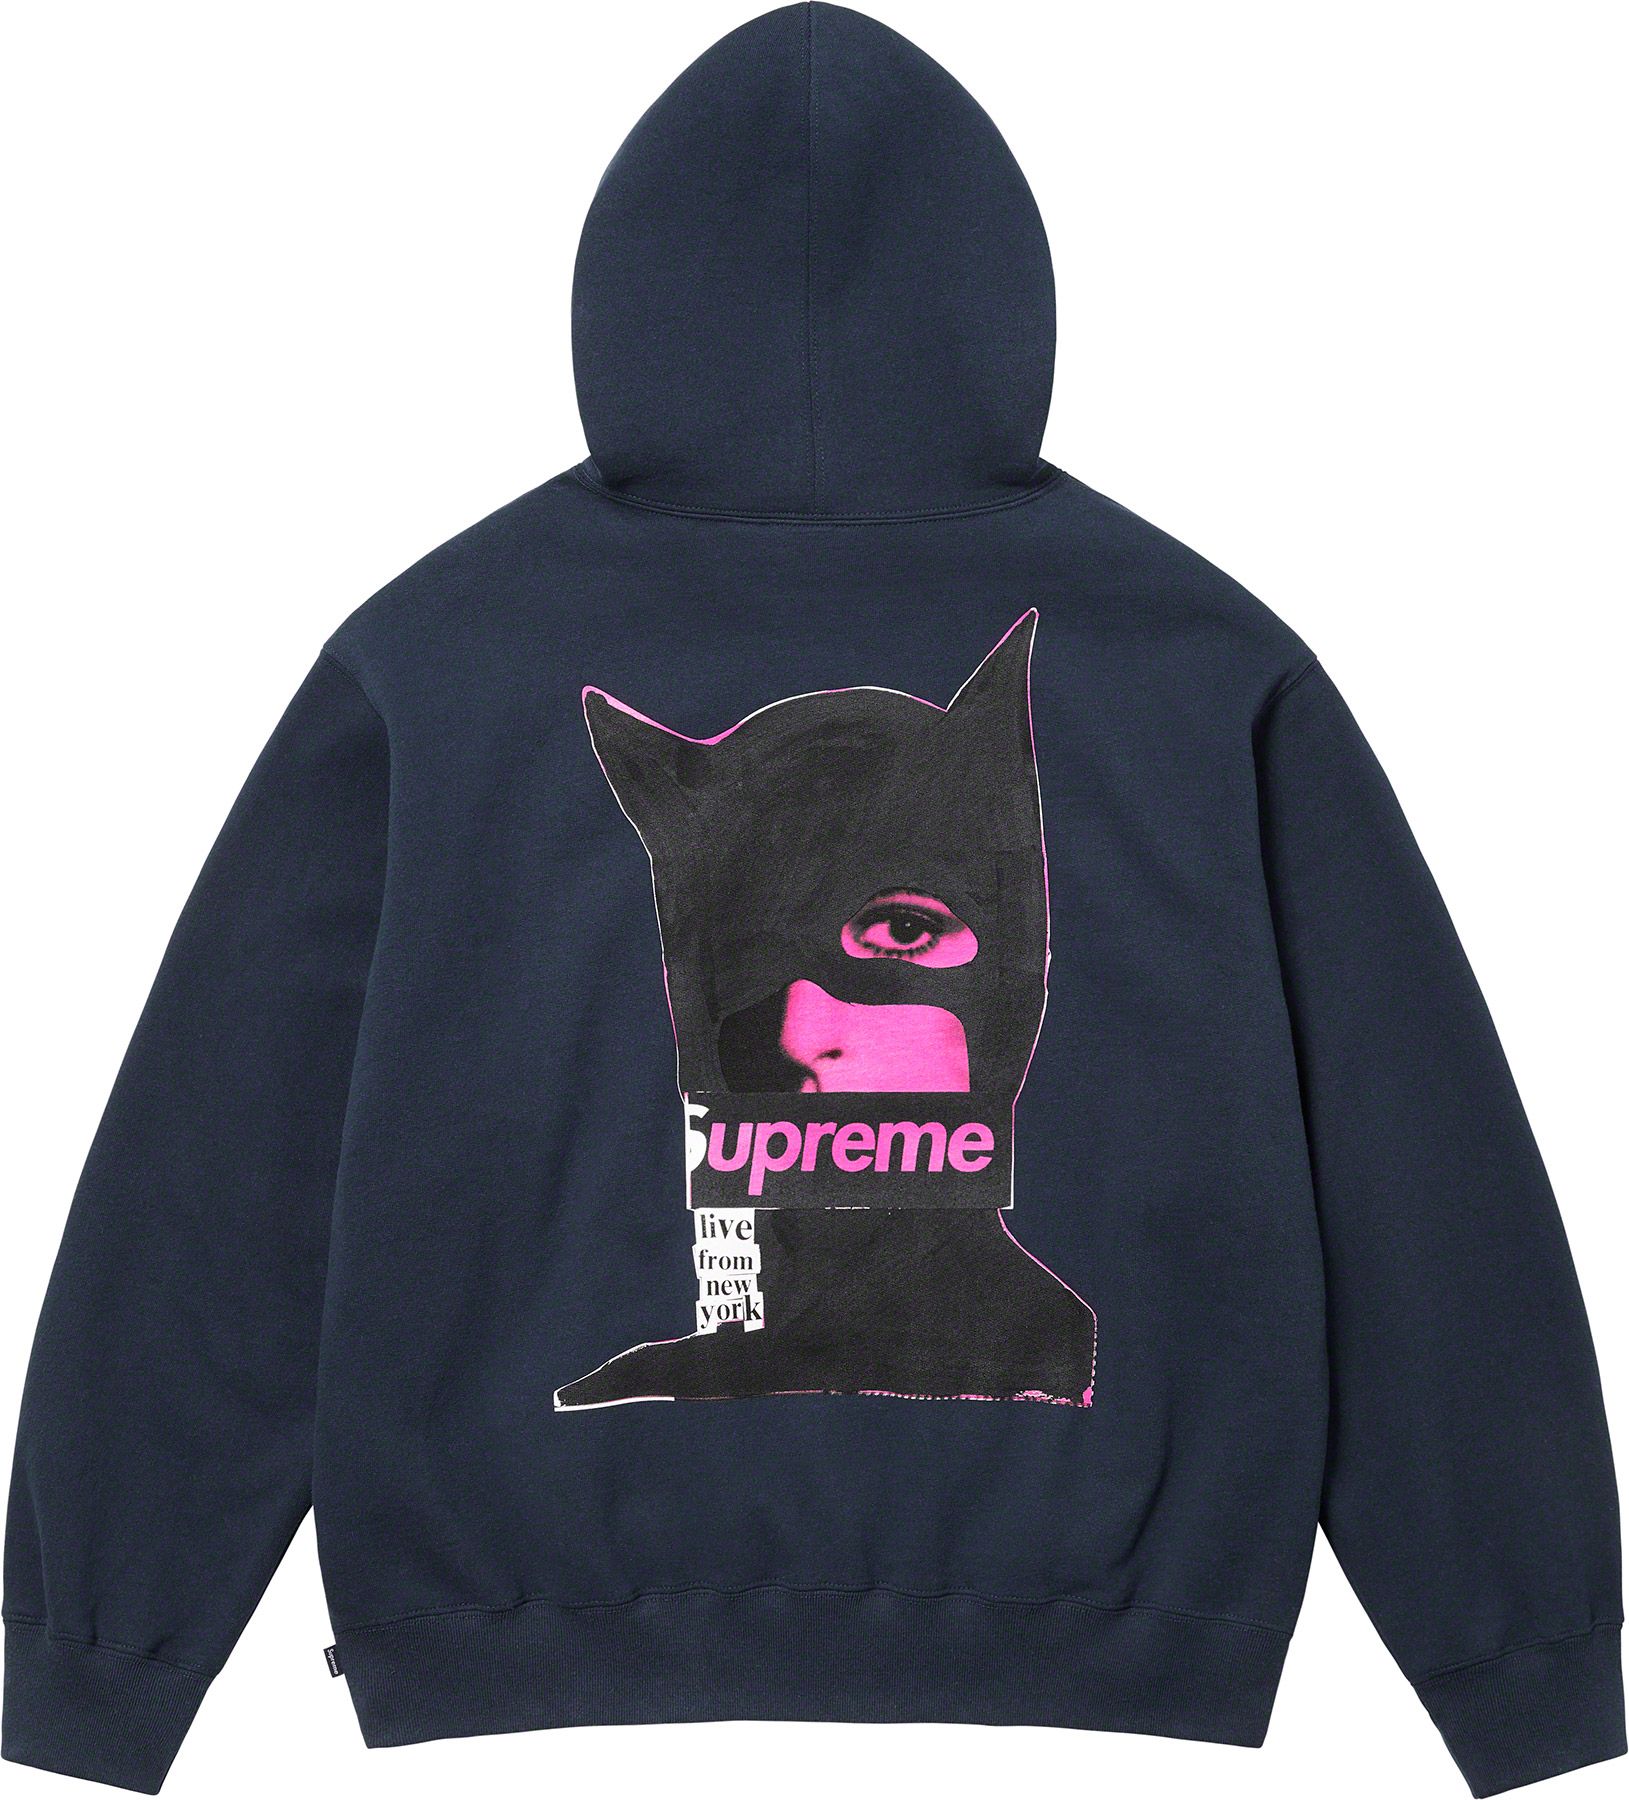 Supreme Catwoman Hooded Sweatshirt - www.sorbillomenu.com